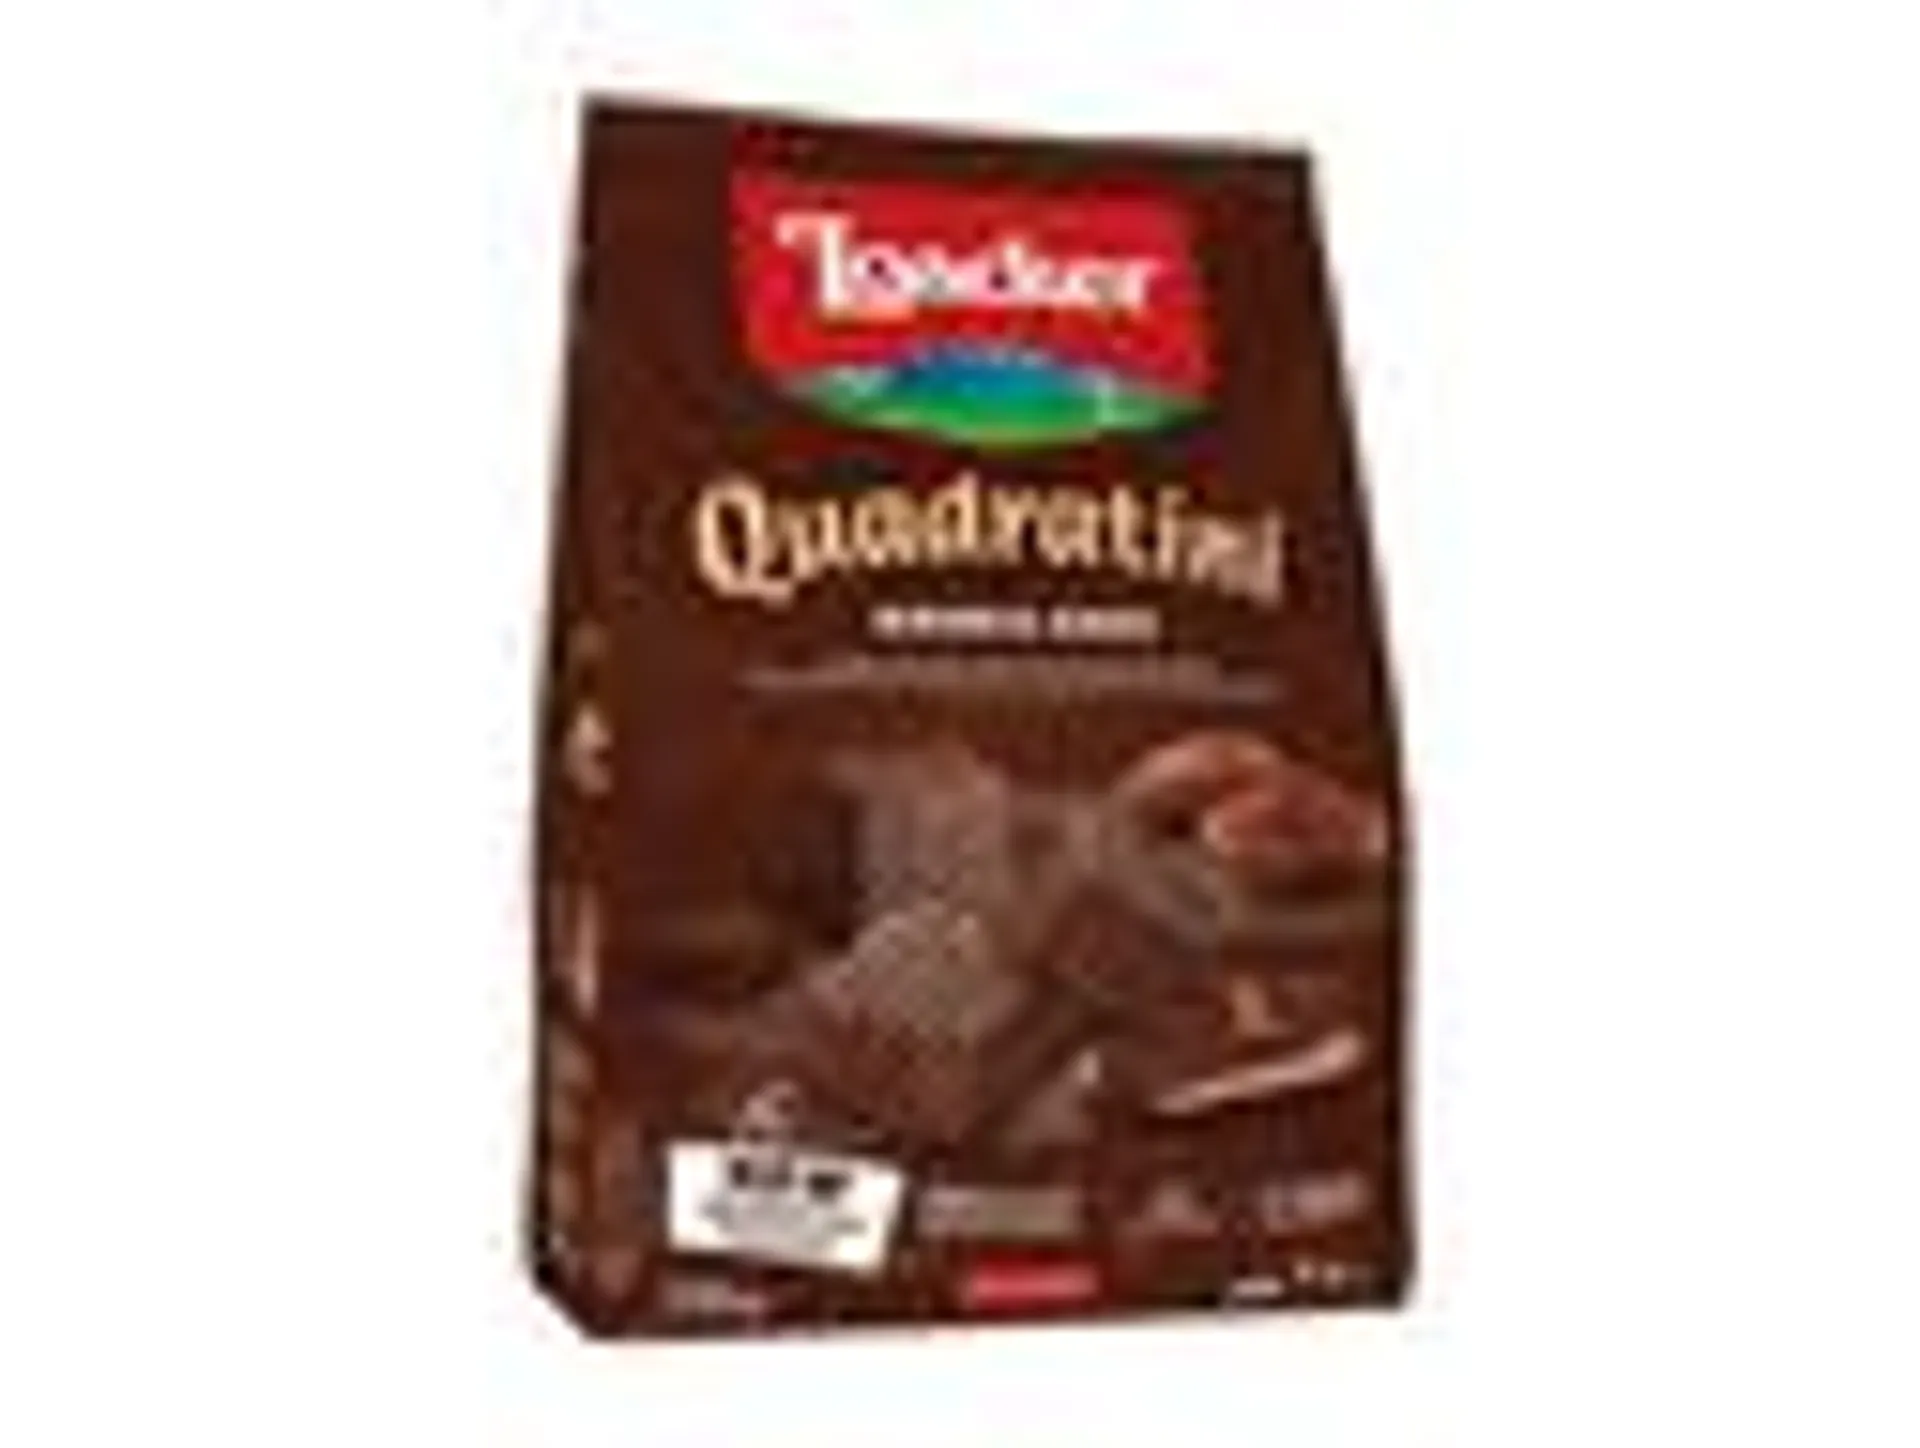 Loacker Quadratini Wafers